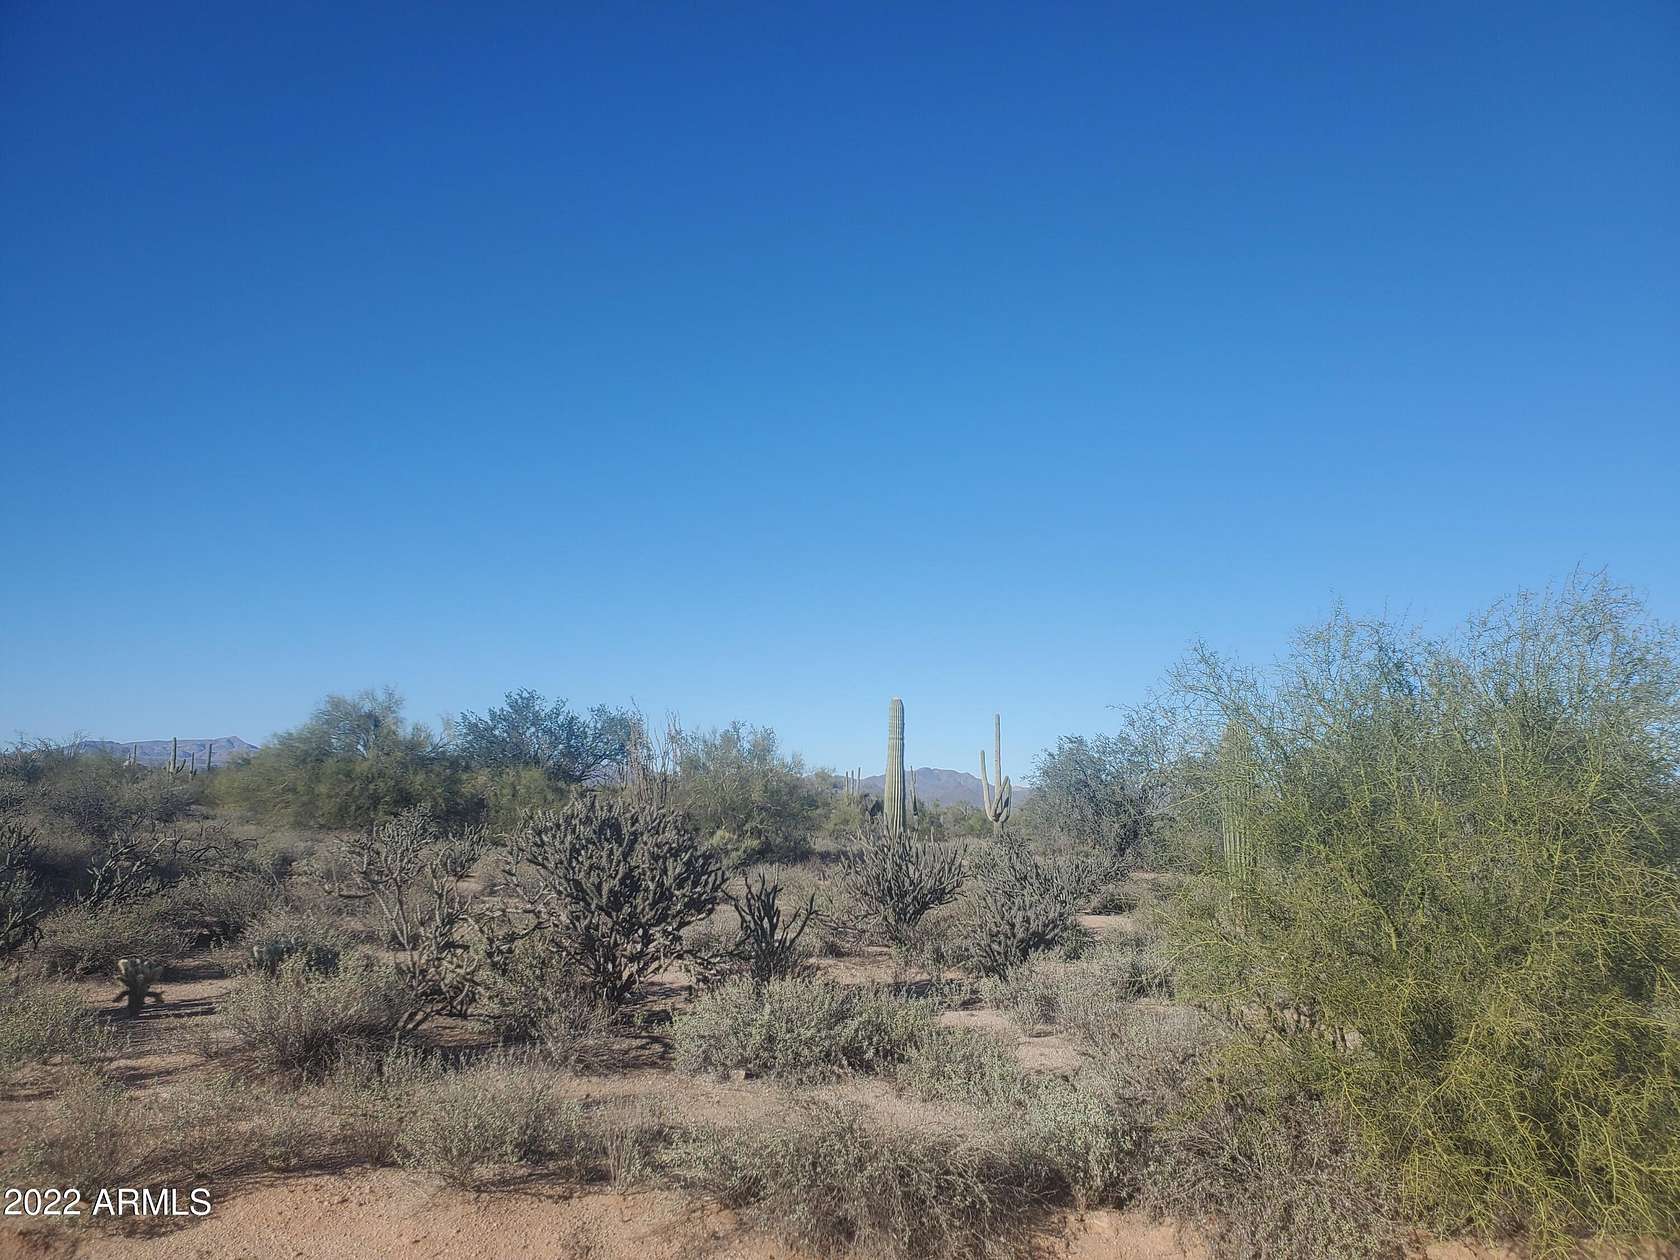 1 Acre of Land for Sale in Rio Verde, Arizona